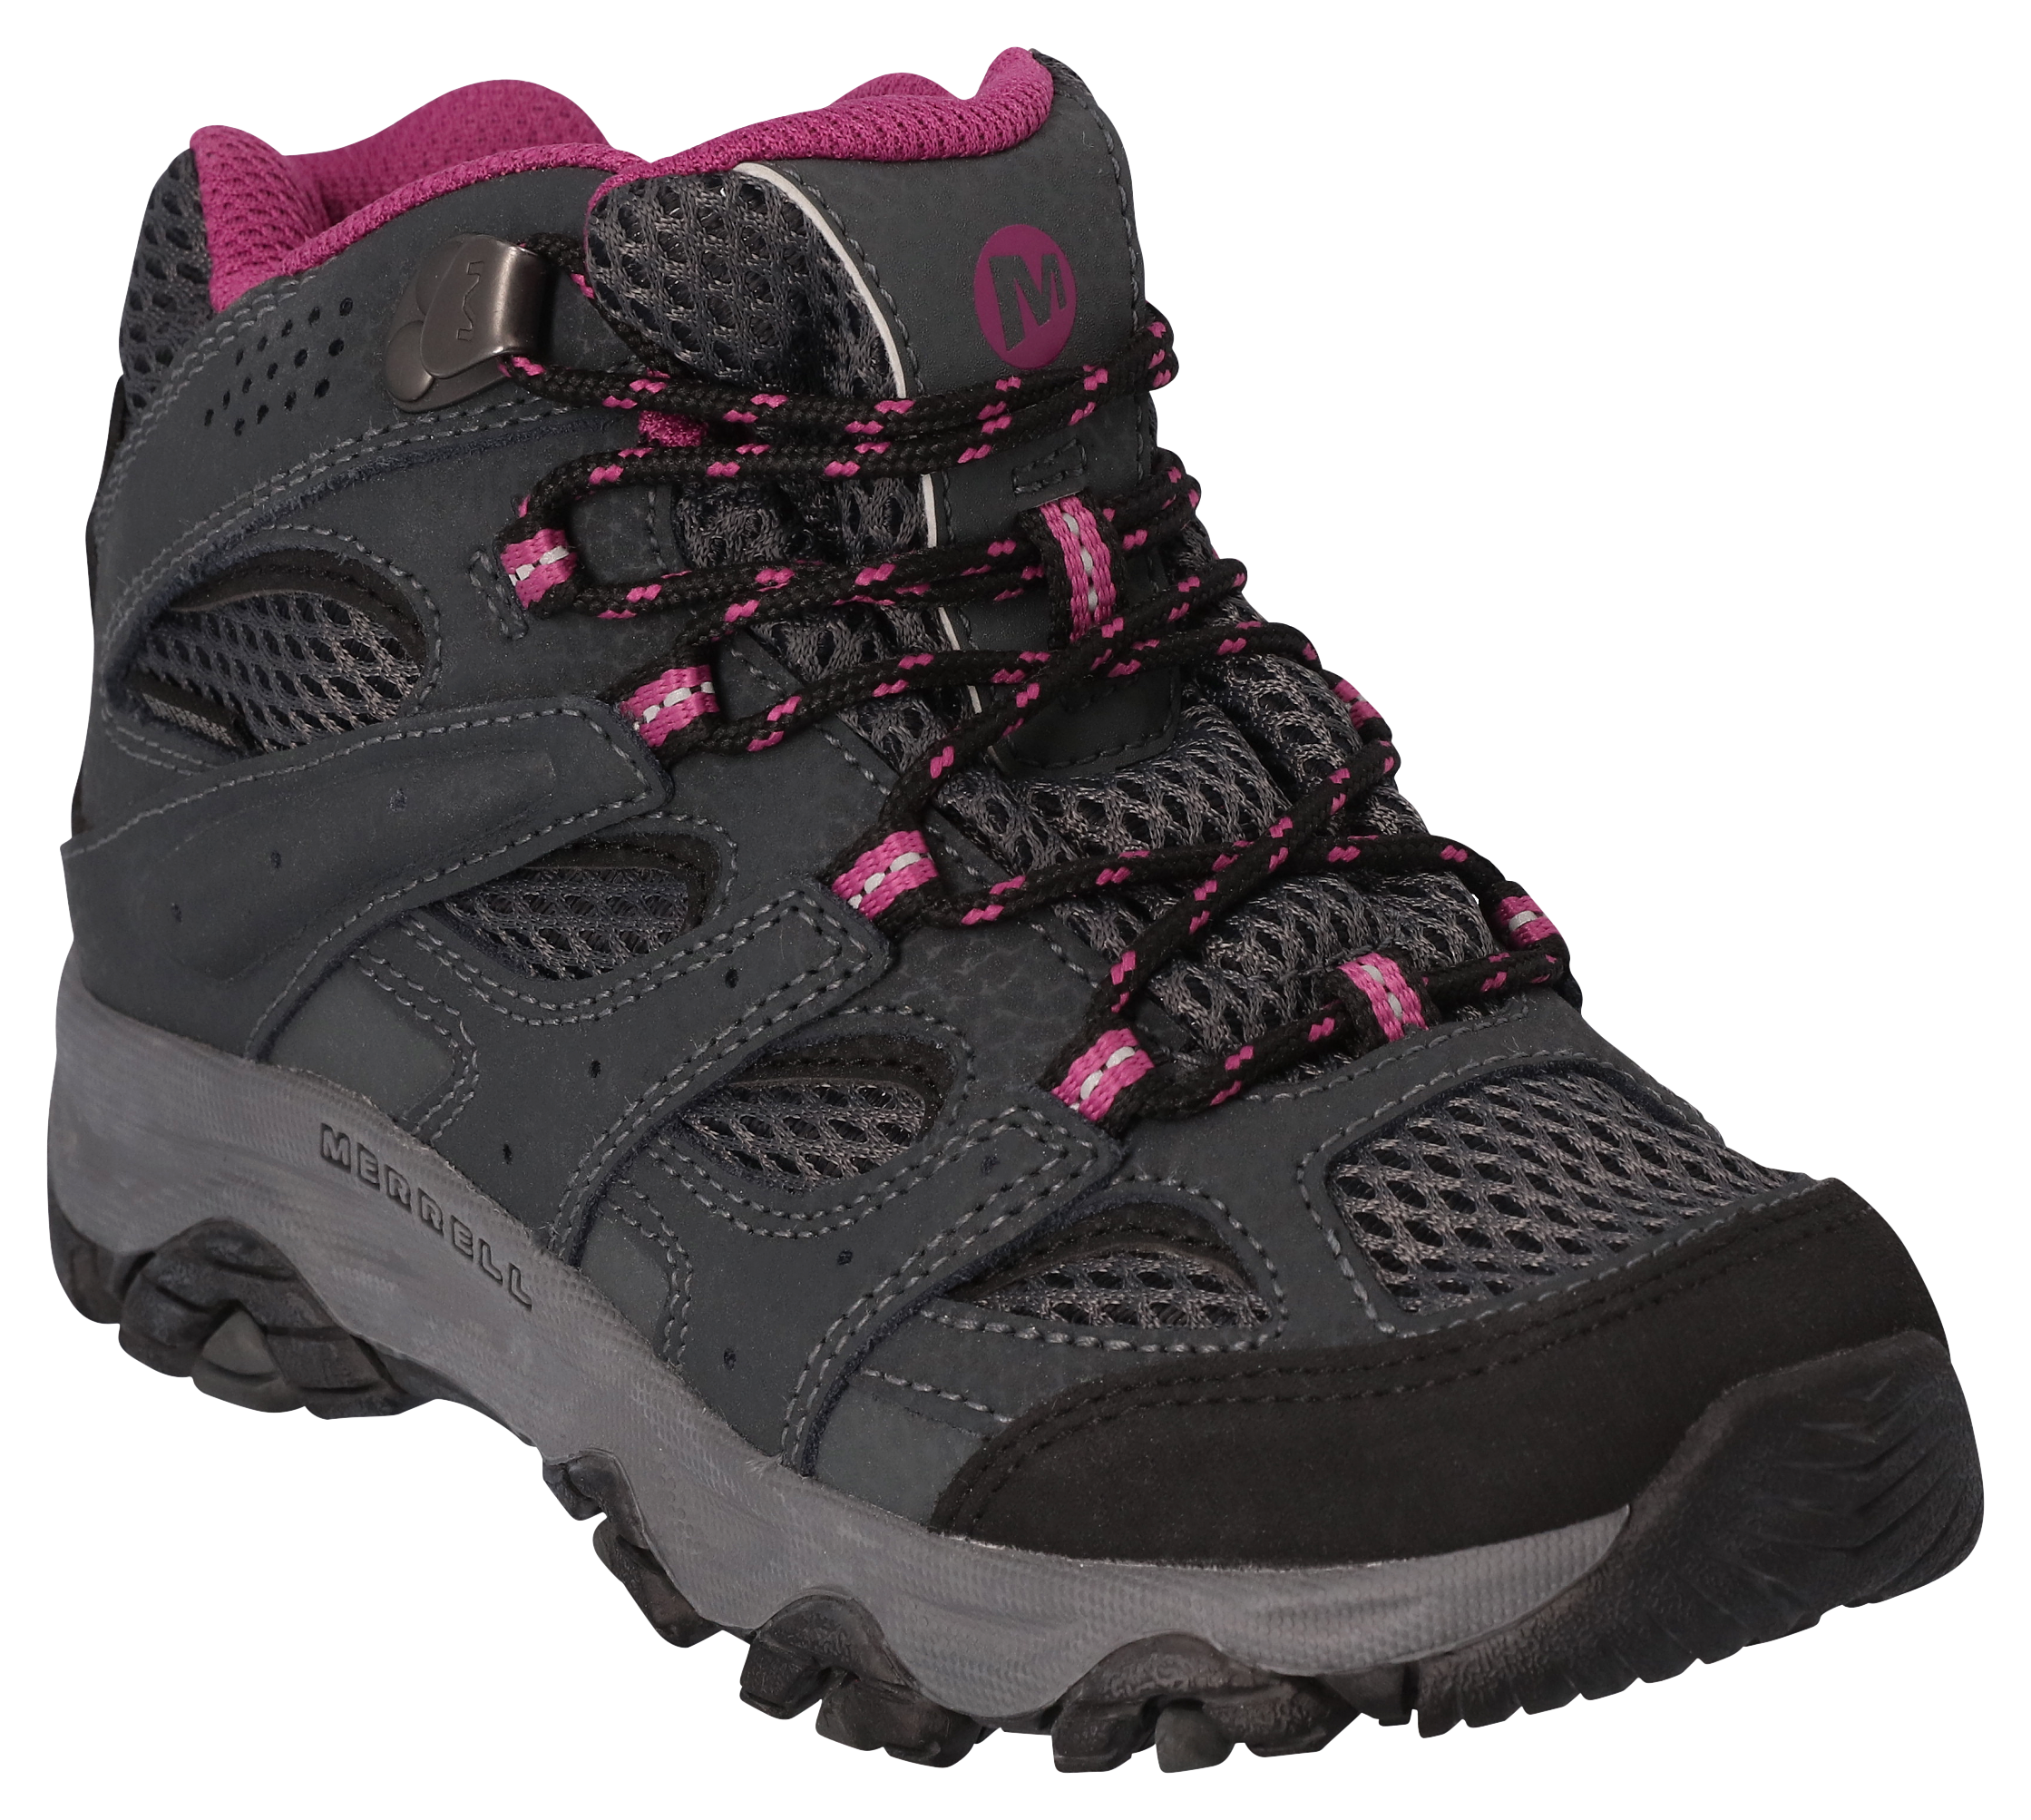 Merrell Moab III Mid Waterproof Hiking Boots for Kids - Granite - 7 Kids